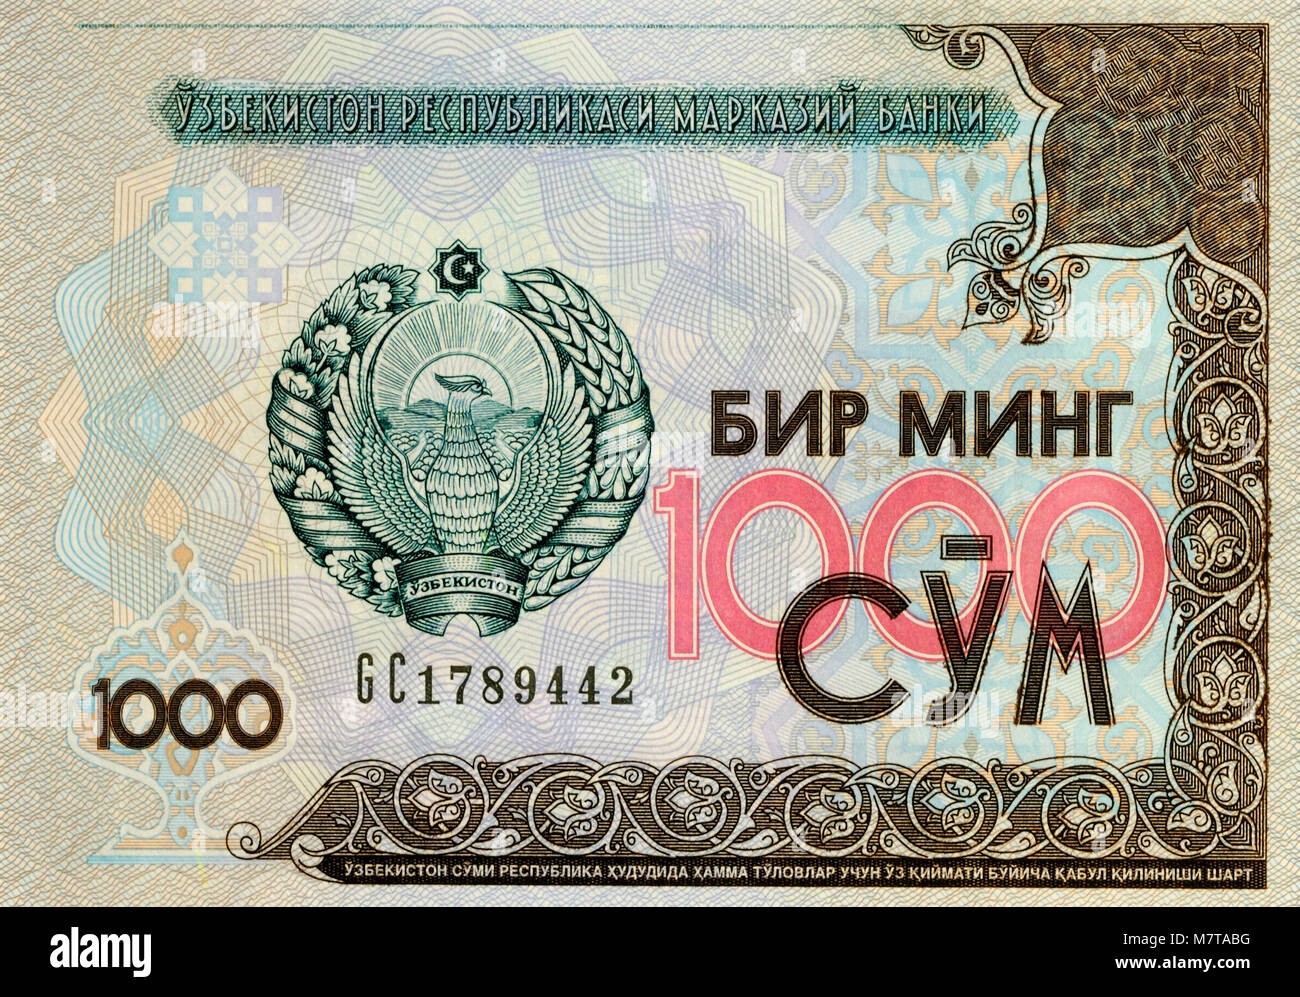 Uzbekistan, One 1 Som Bank Note Stock Photo